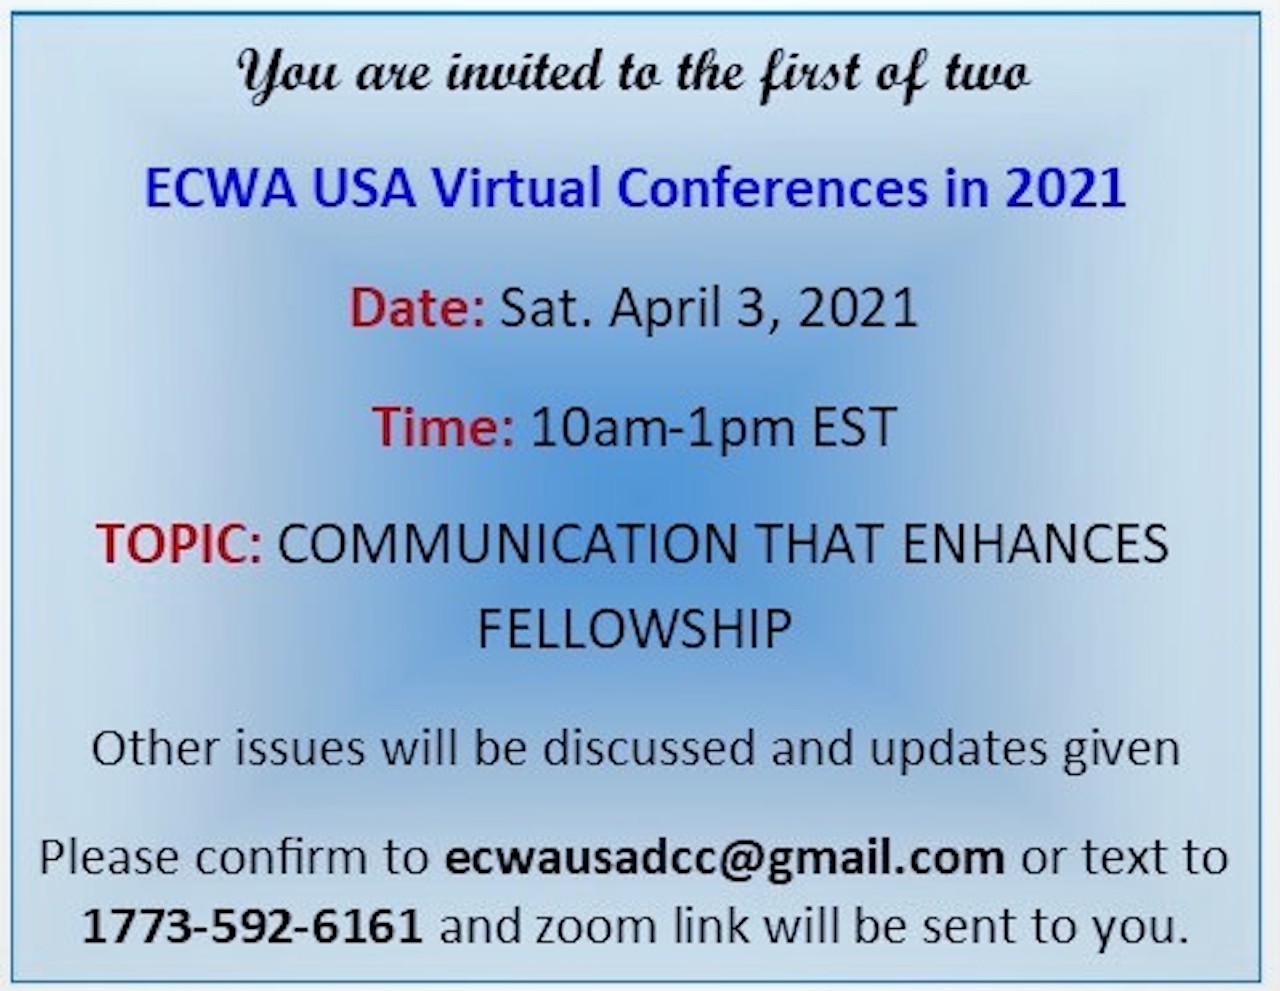 ECWA USA Virtual Conference April 3, 2021 From 10am-1pm EST